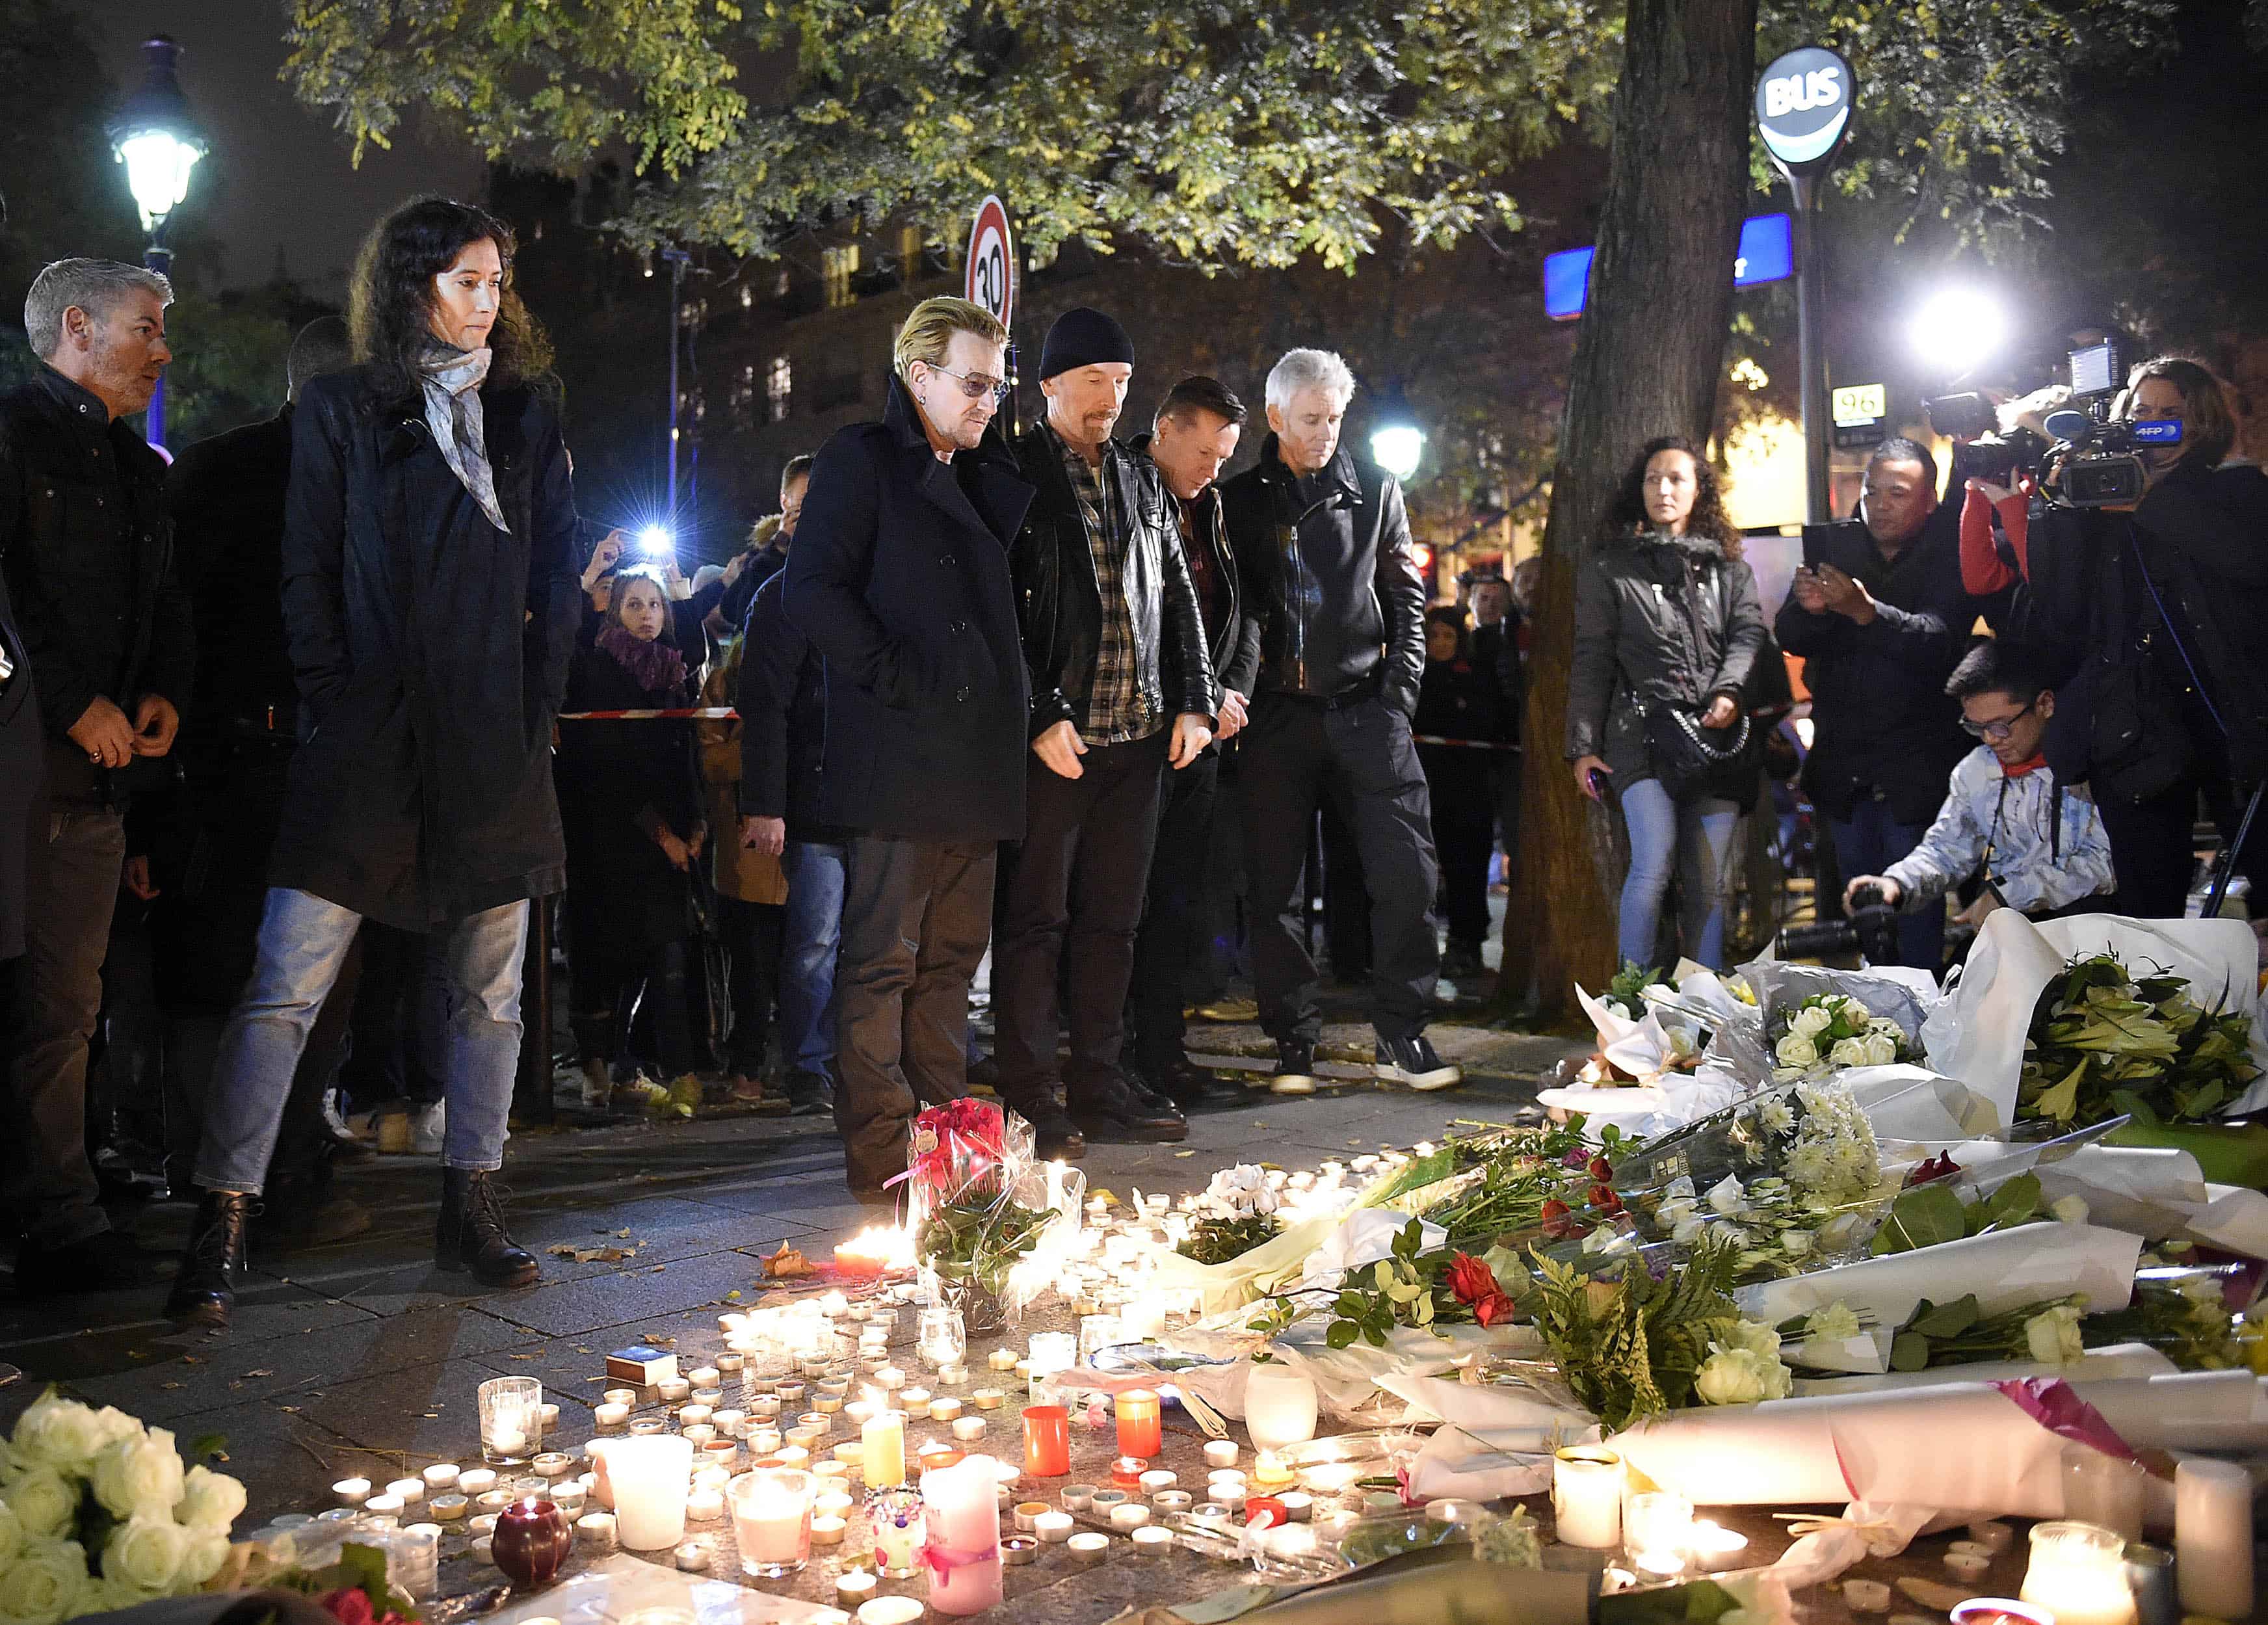 U2 in Paris after attacks